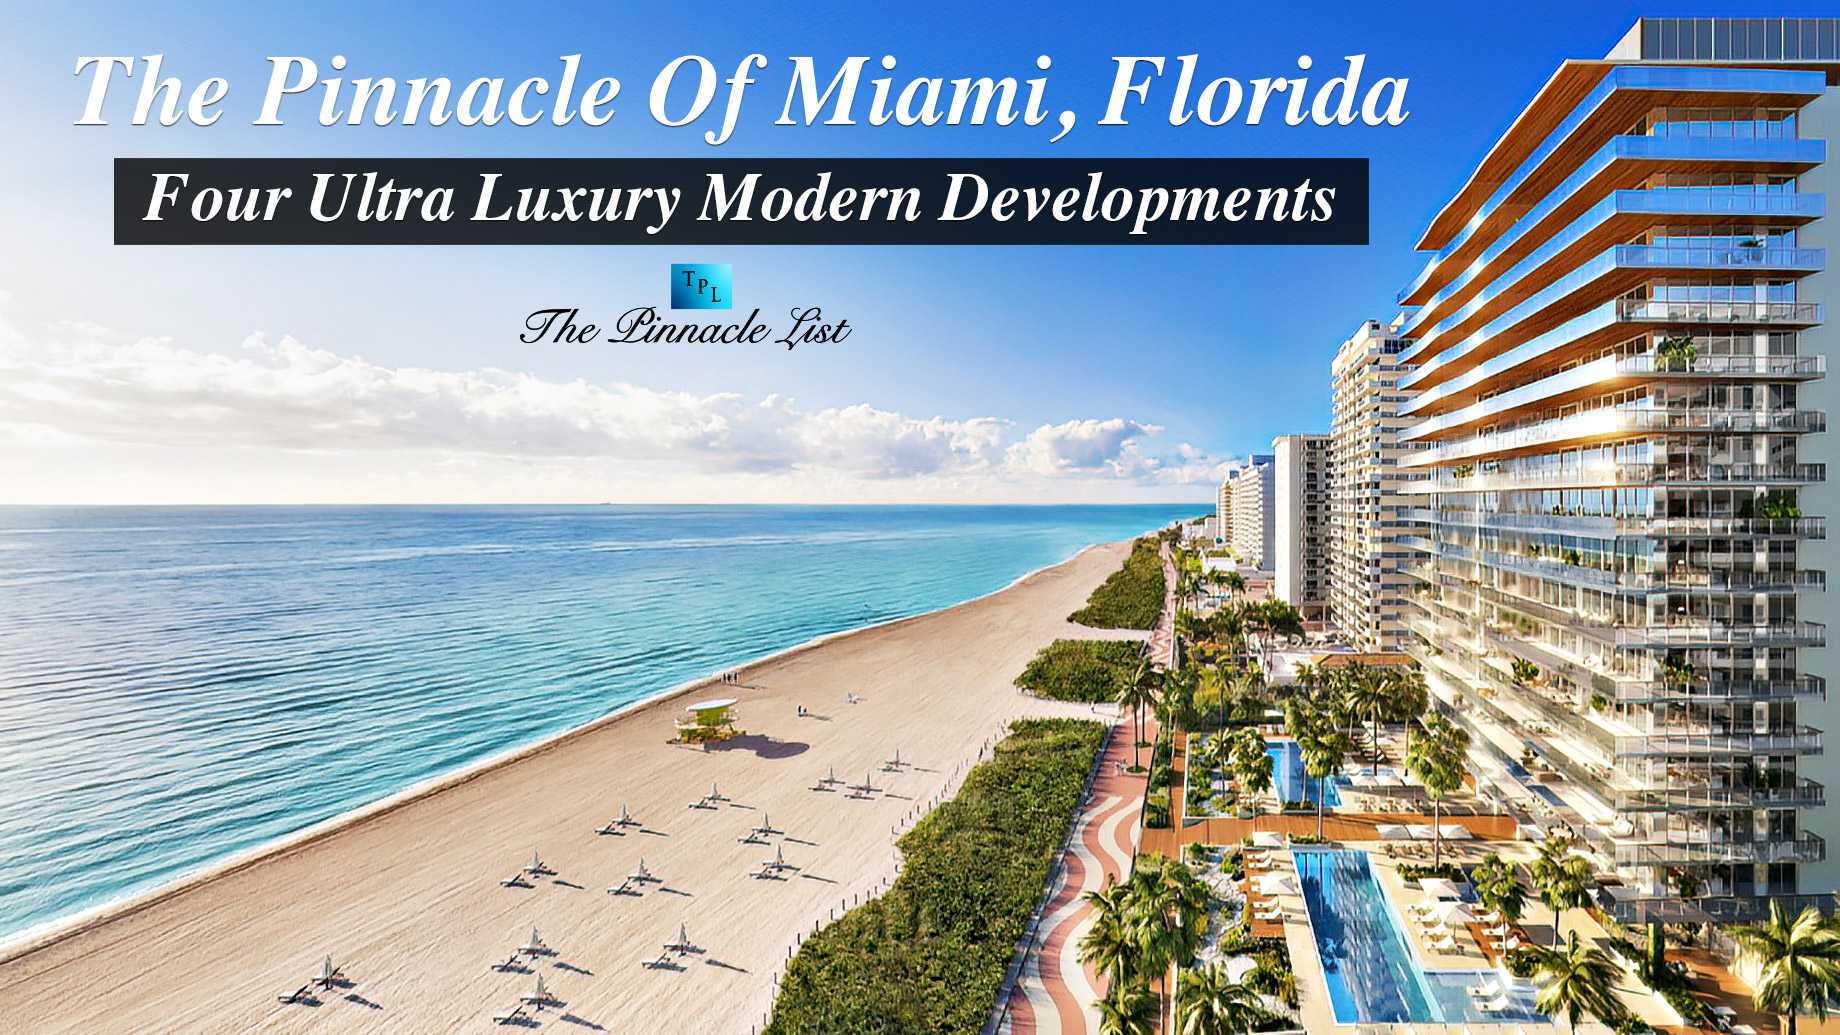 The Pinnacle Of Miami, Florida – Four Ultra Luxury Modern Developments